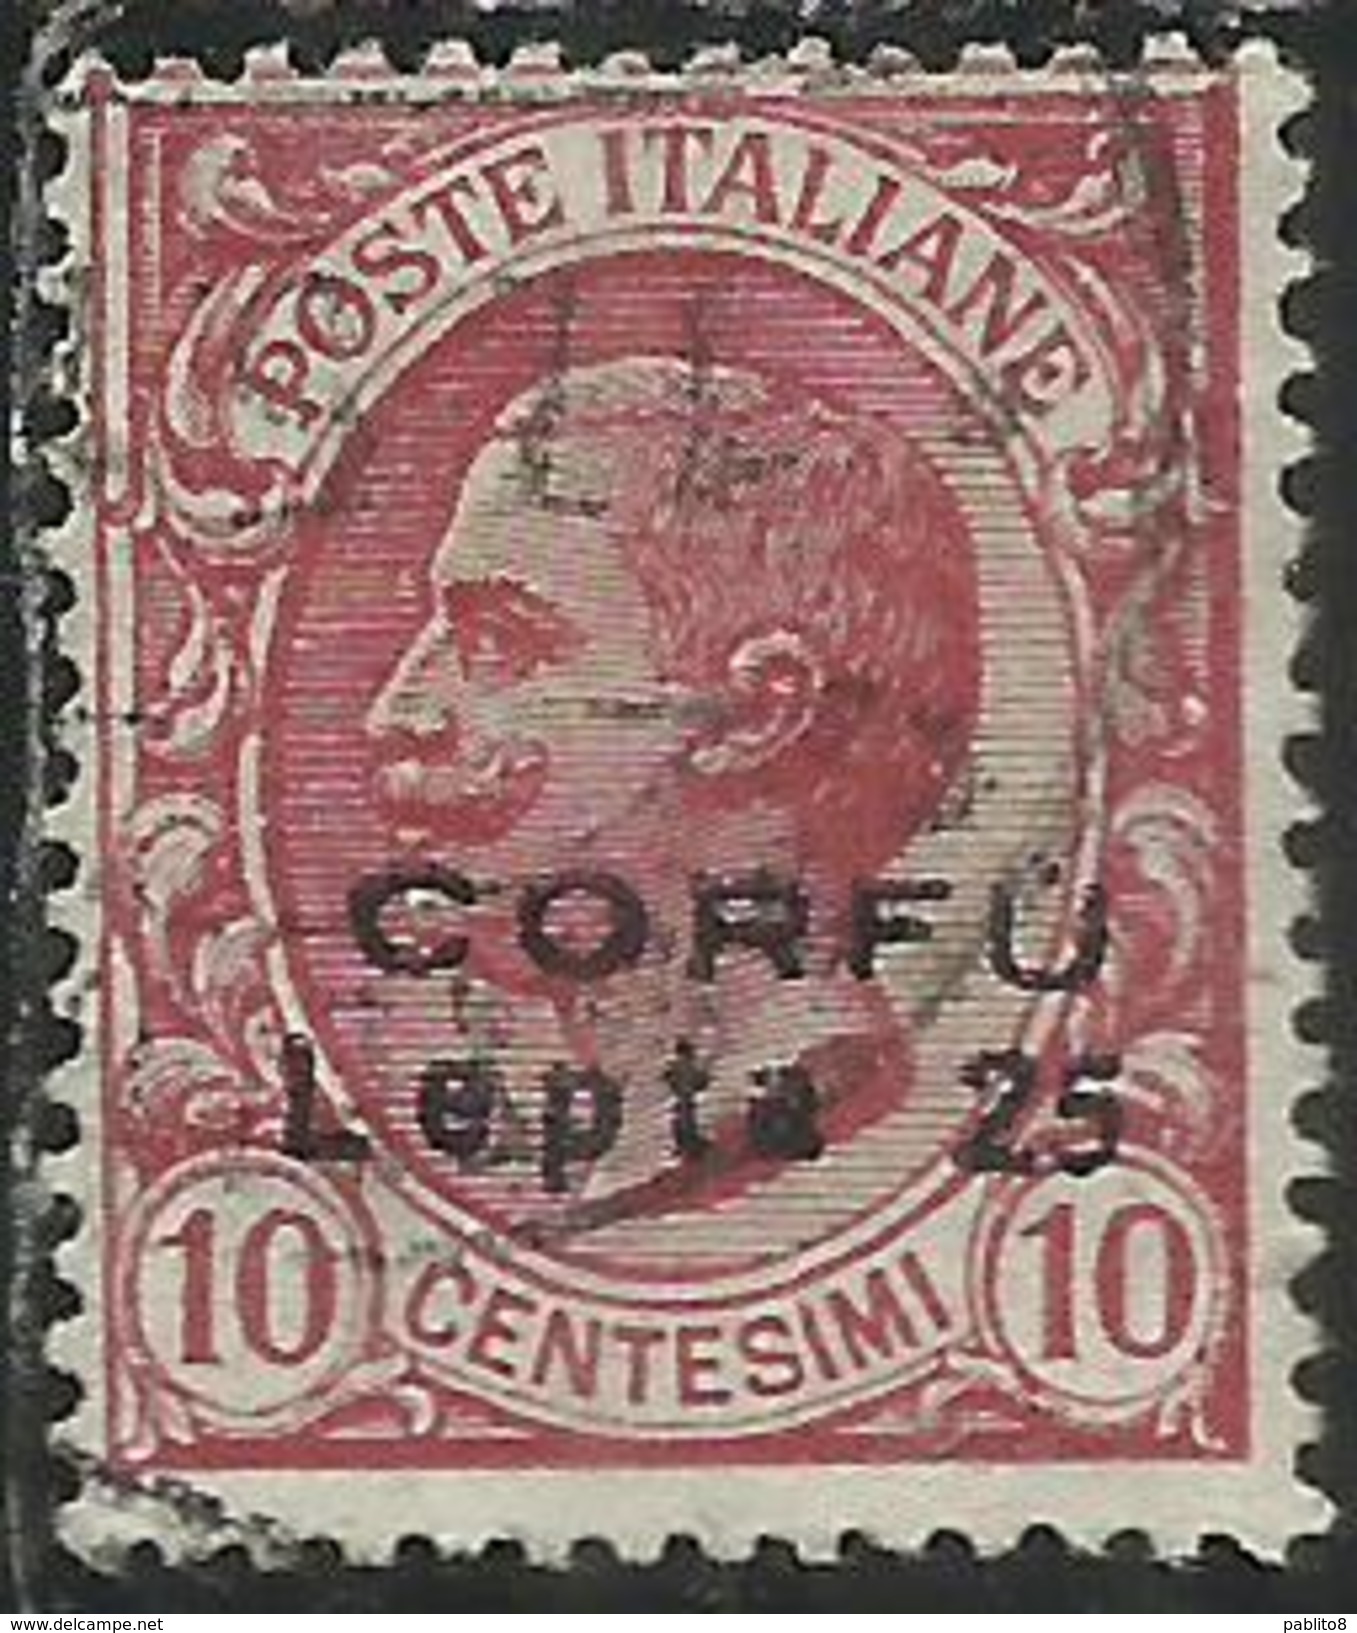 CORFU´ 1923 SOPRASTAMPATO D´ITALIA ITALY OVERPRINTED SURCHARGE 25 LEPTA SU 10 CENT. USED - Corfù